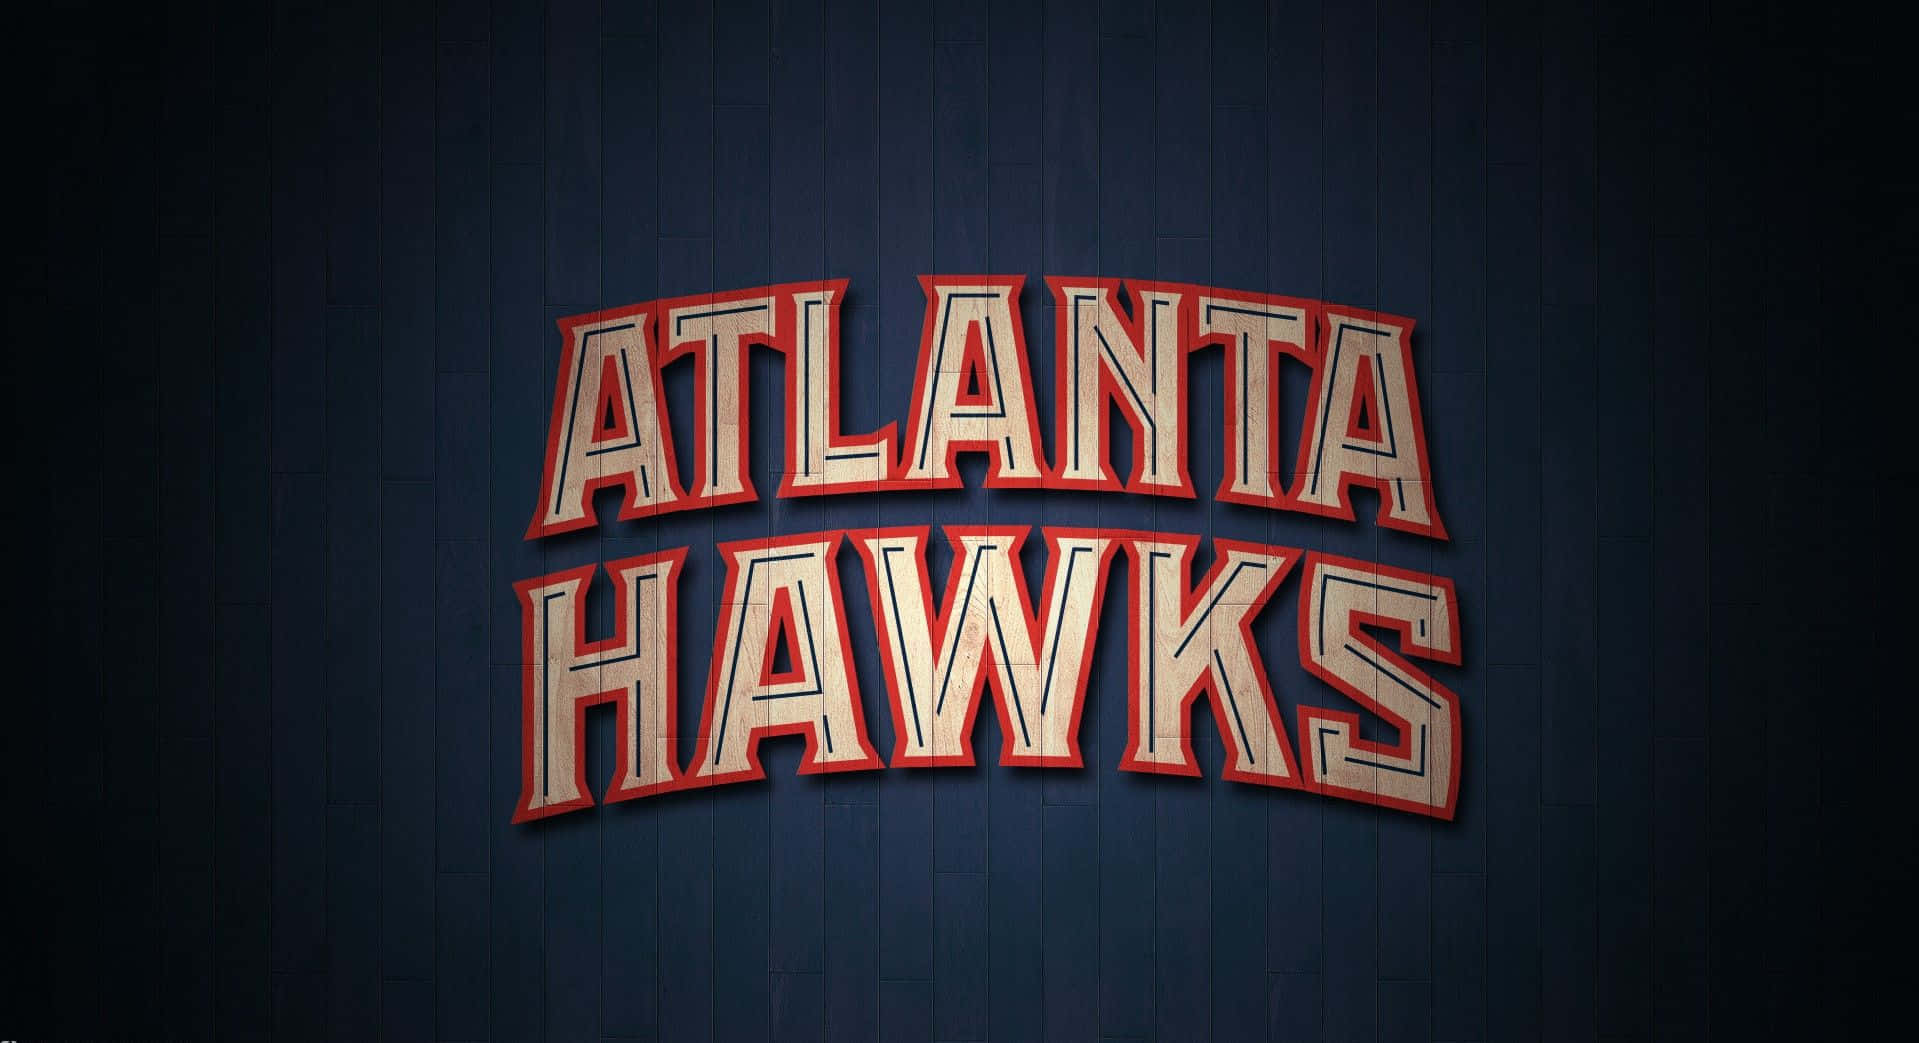 Take flight with the Atlanta Hawks